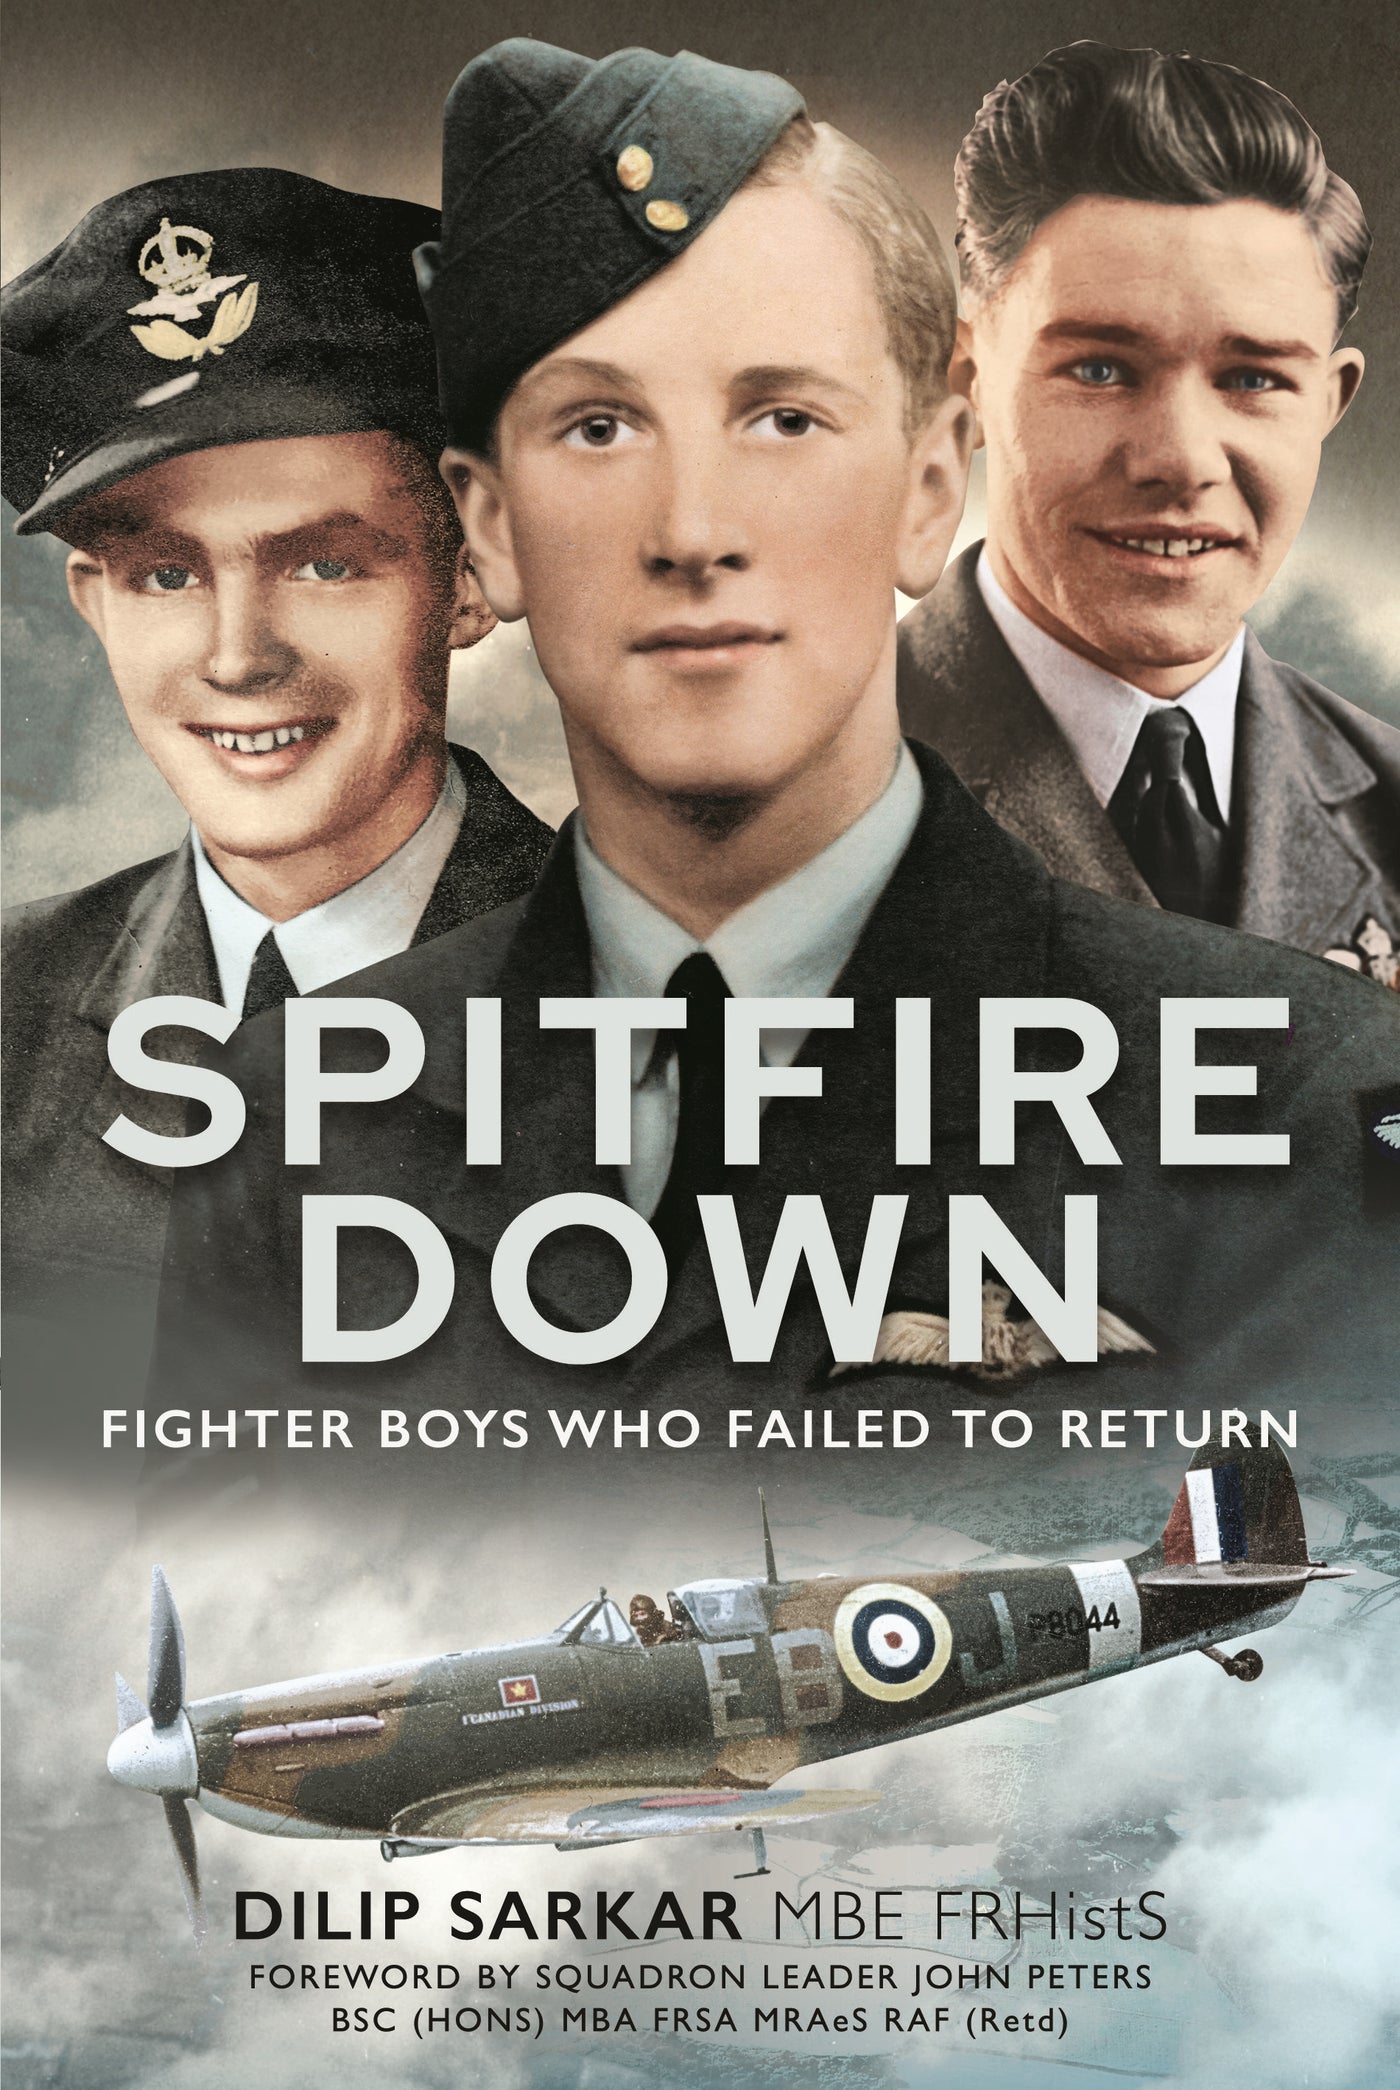 Spitfire Down